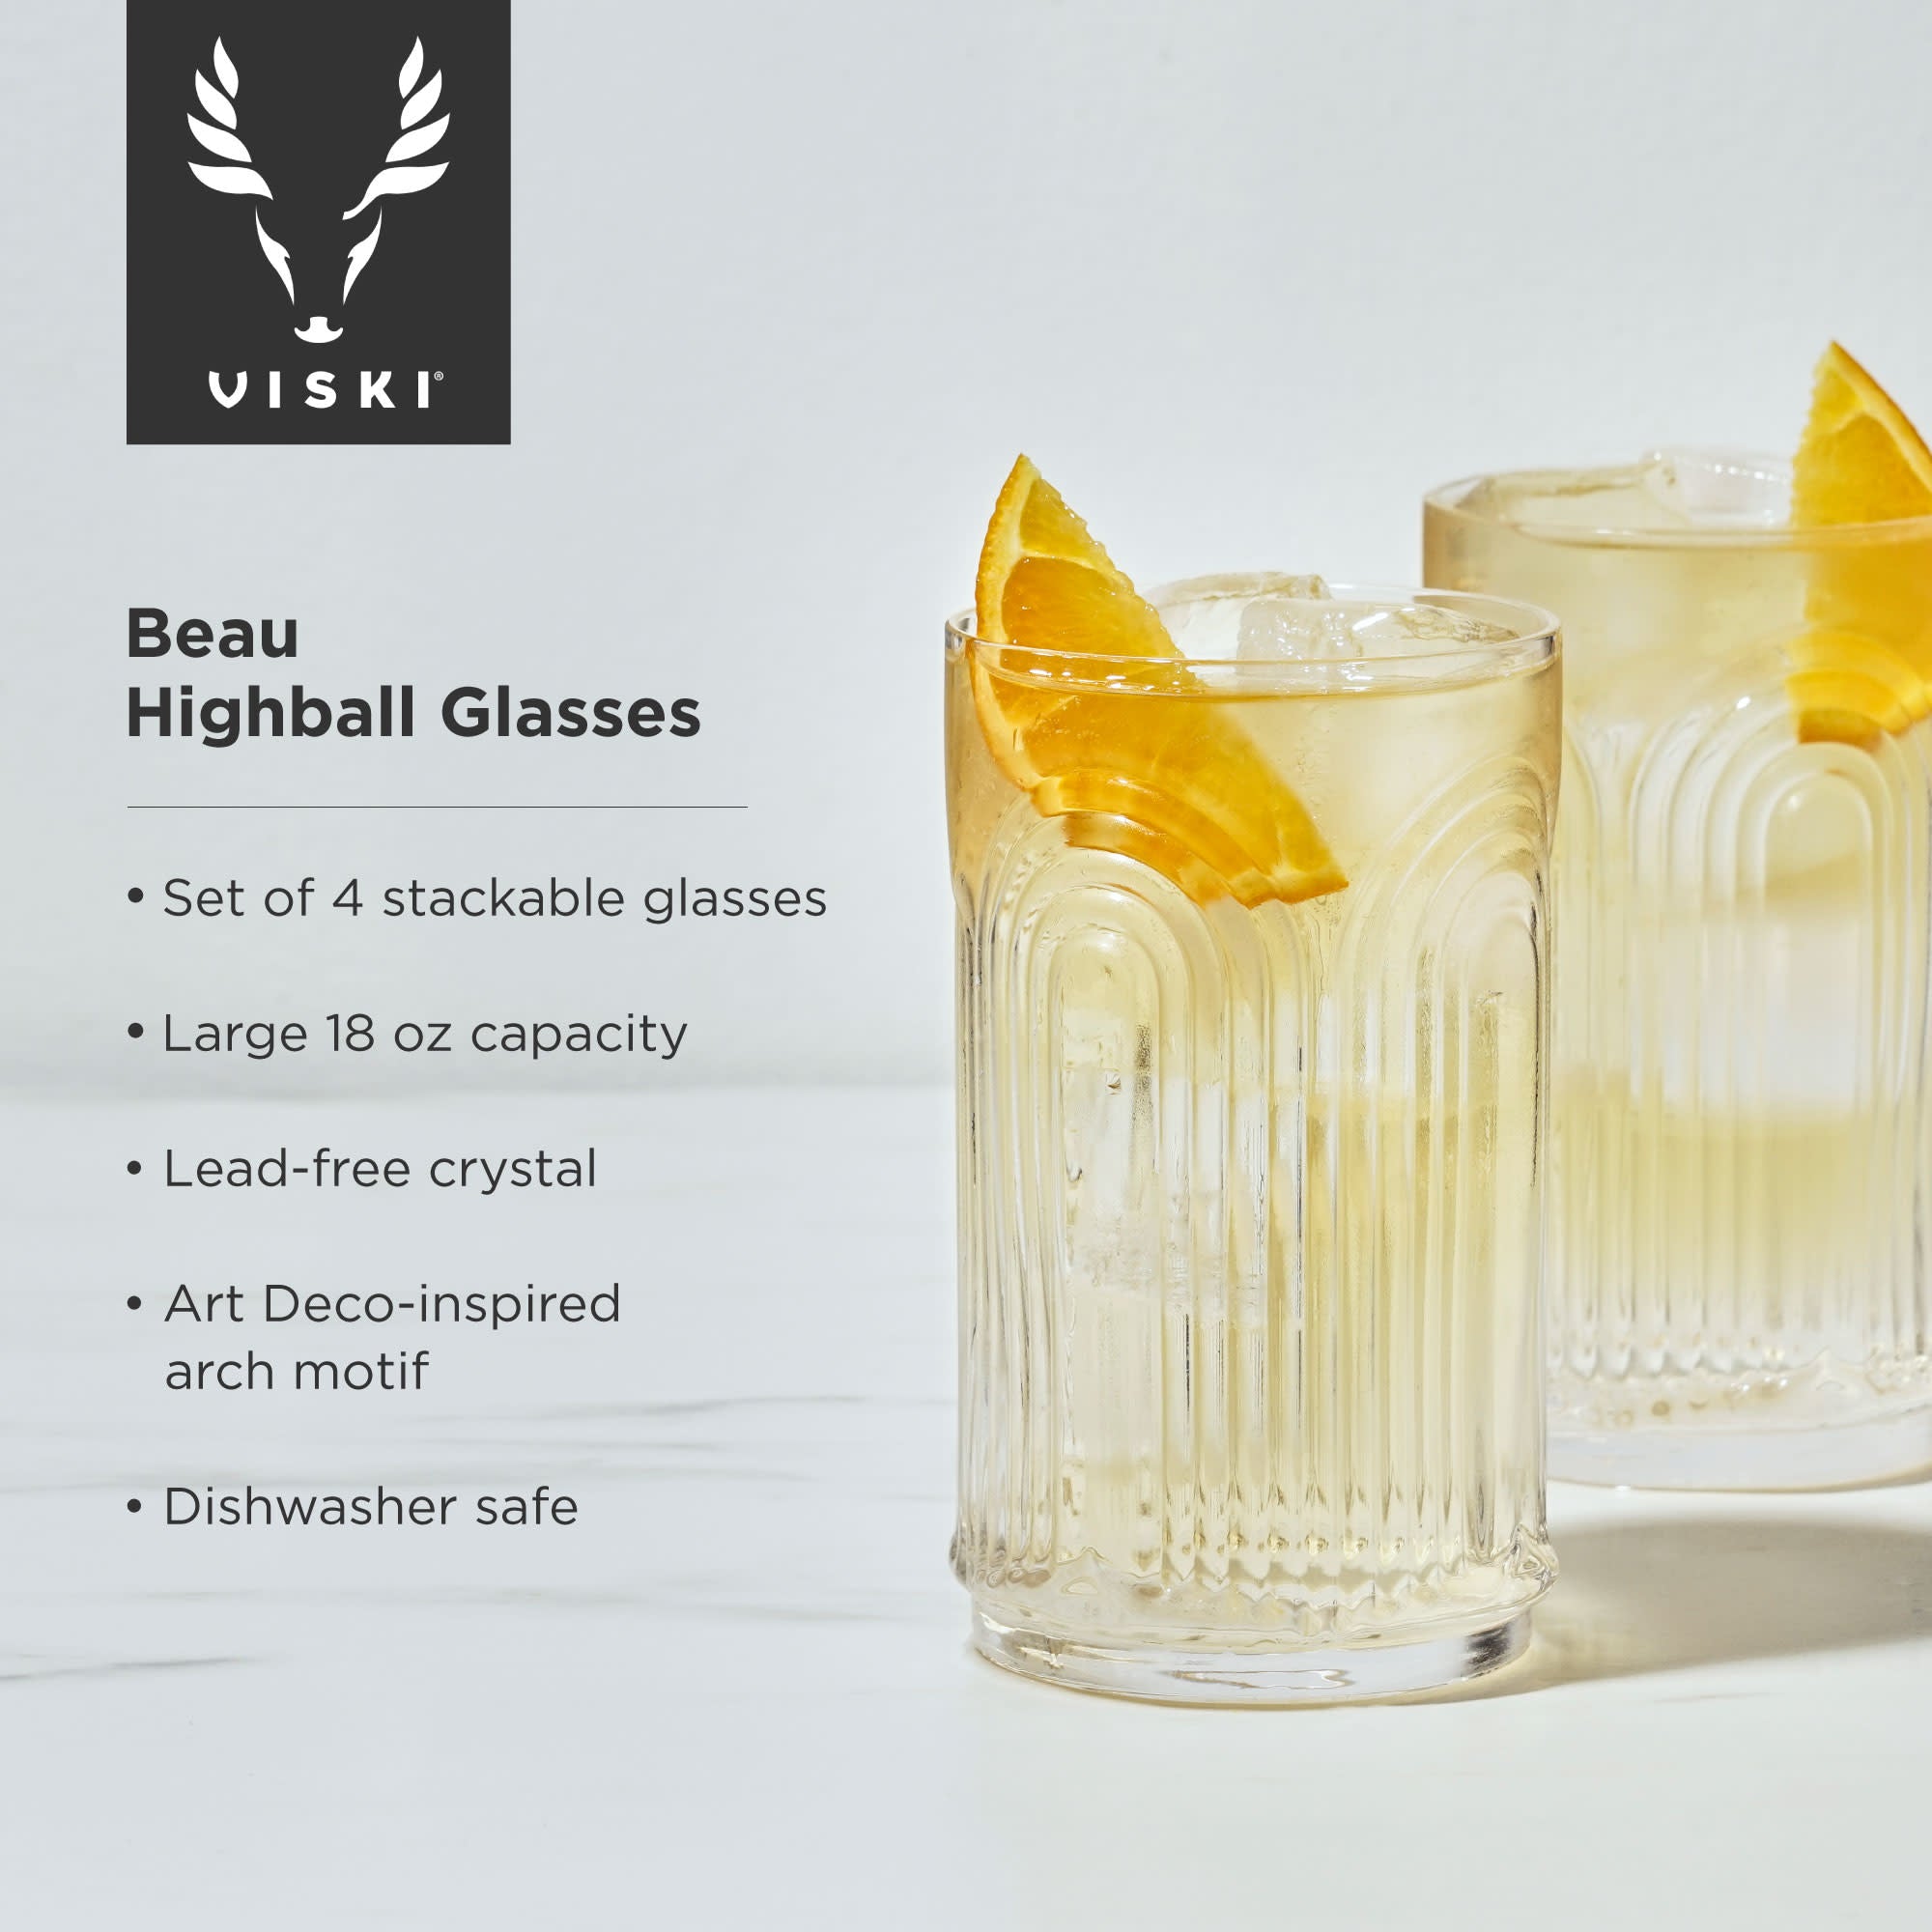 Beau Highball Glasses by Viski (set of 4)